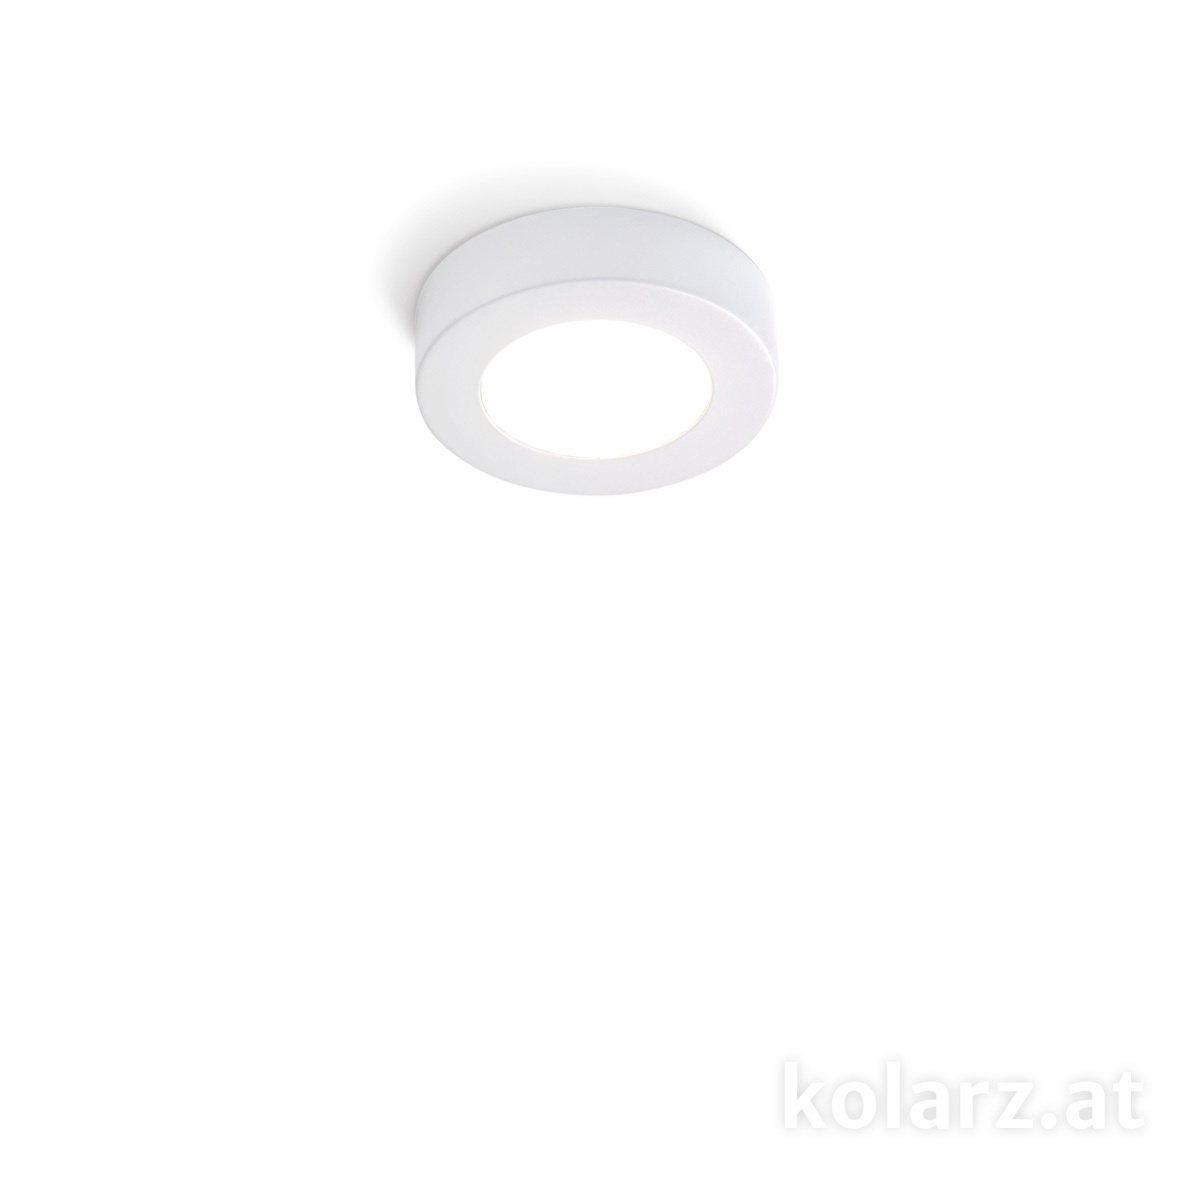 KOLARZ LeuchtenSpot CLICK, Weiß, Ø12 Weiß, Ø12cm, Höhe 3cm, 1-flammig, GX53